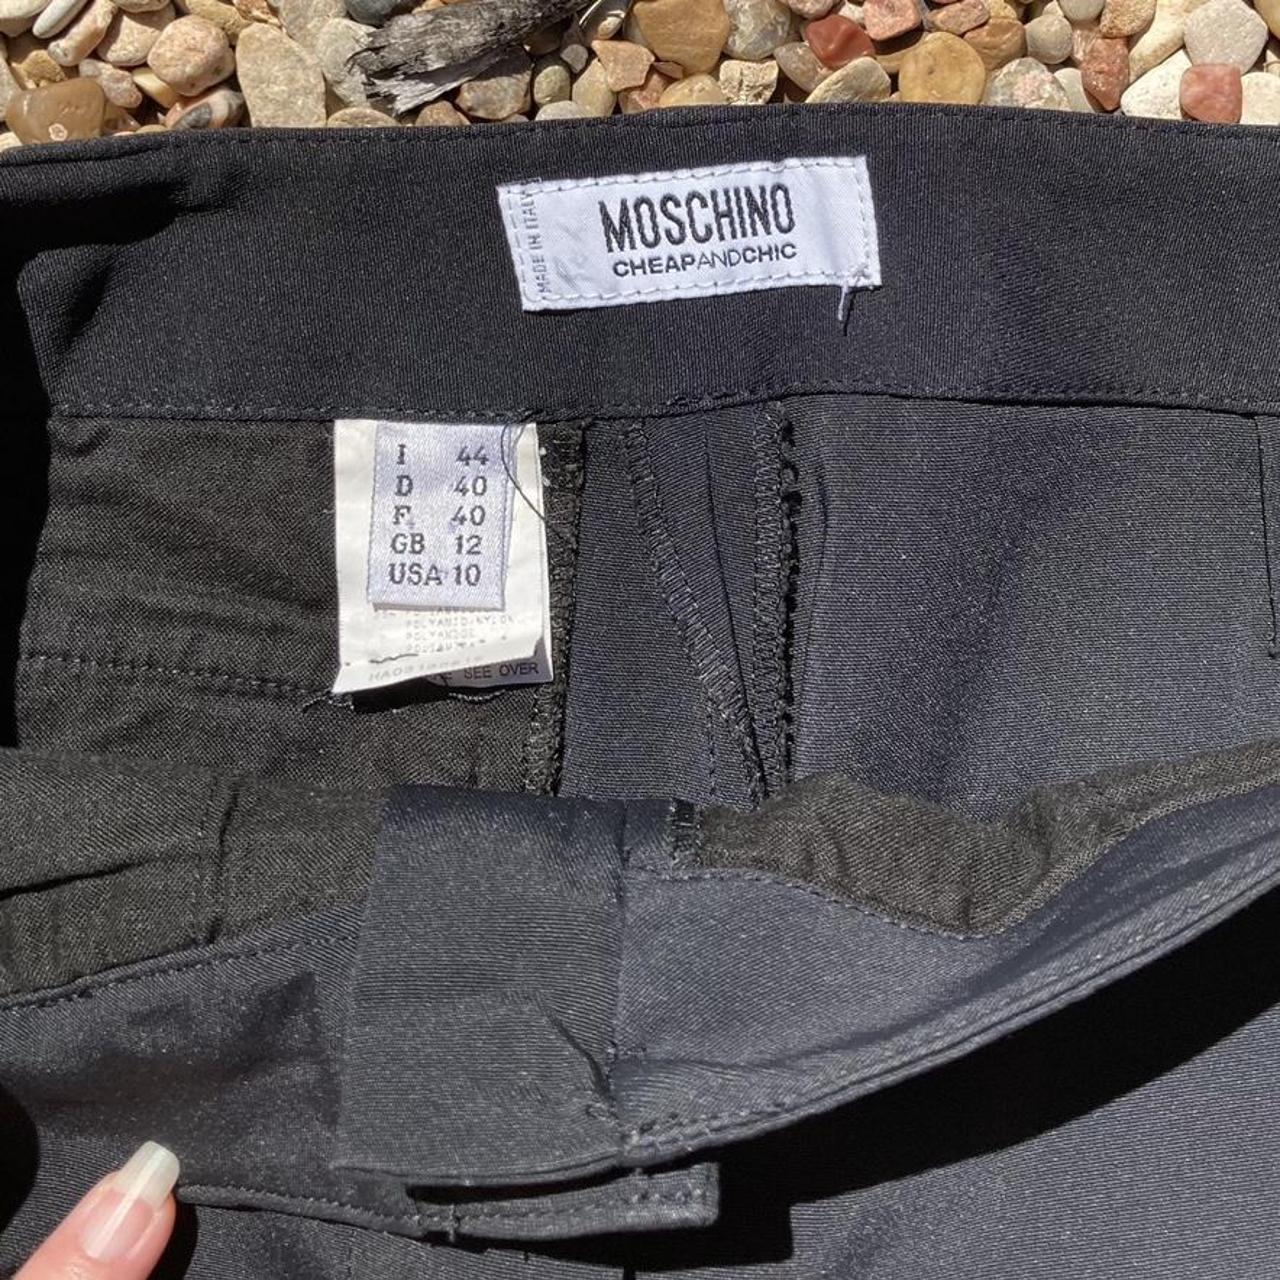 Moschino Cheap & Chic Women's Black Trousers (3)